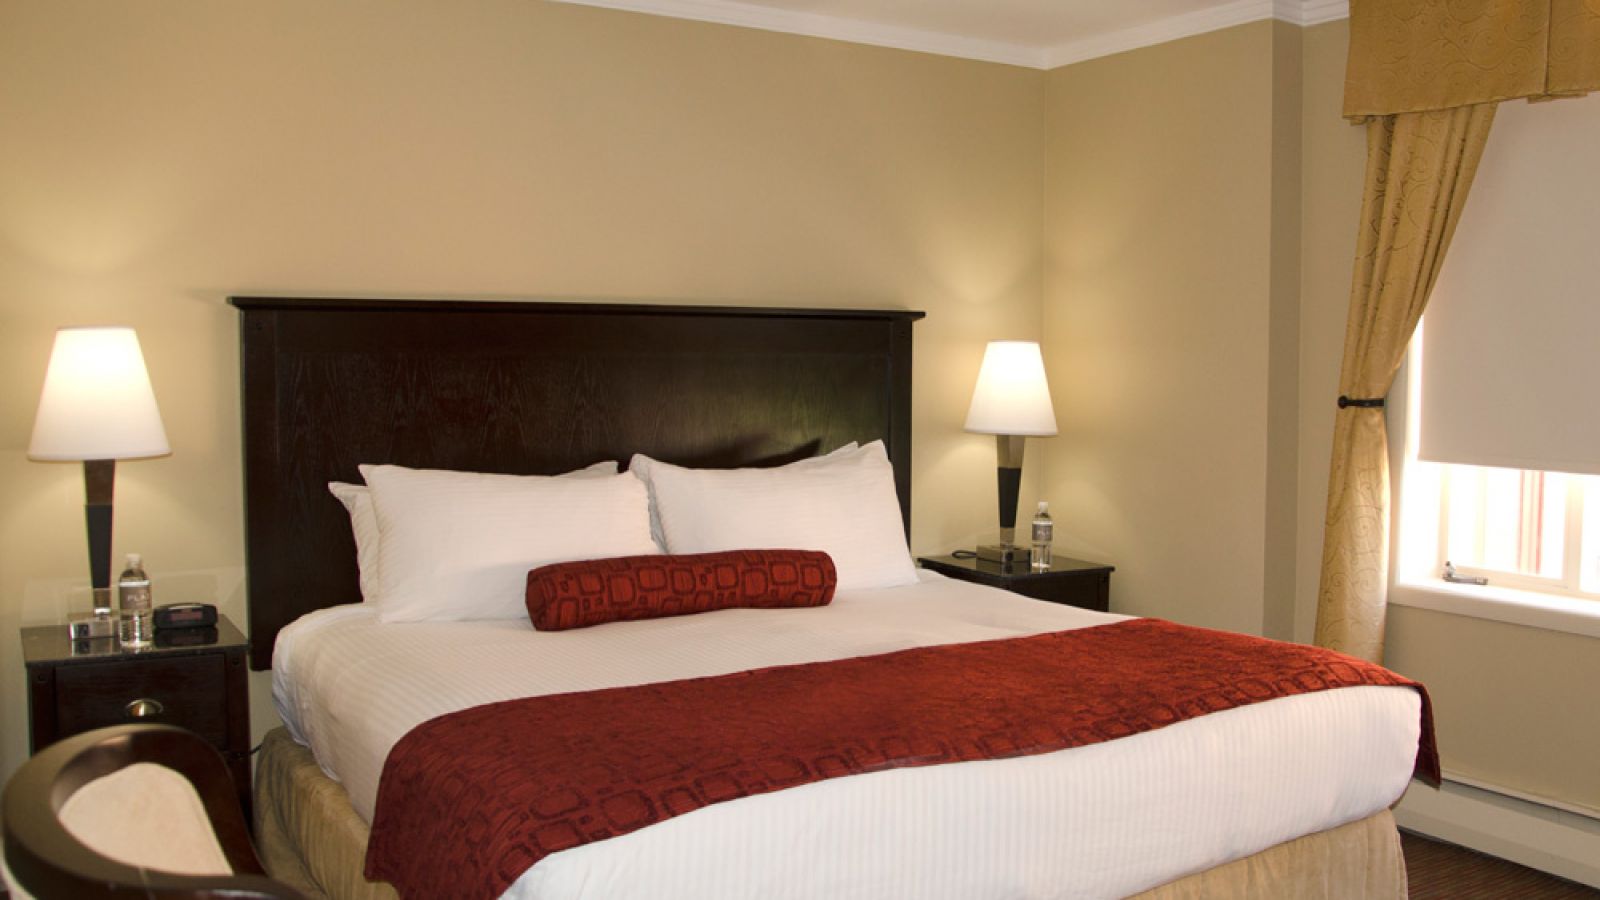 Plaza Hotel Kamloops - Standard King room